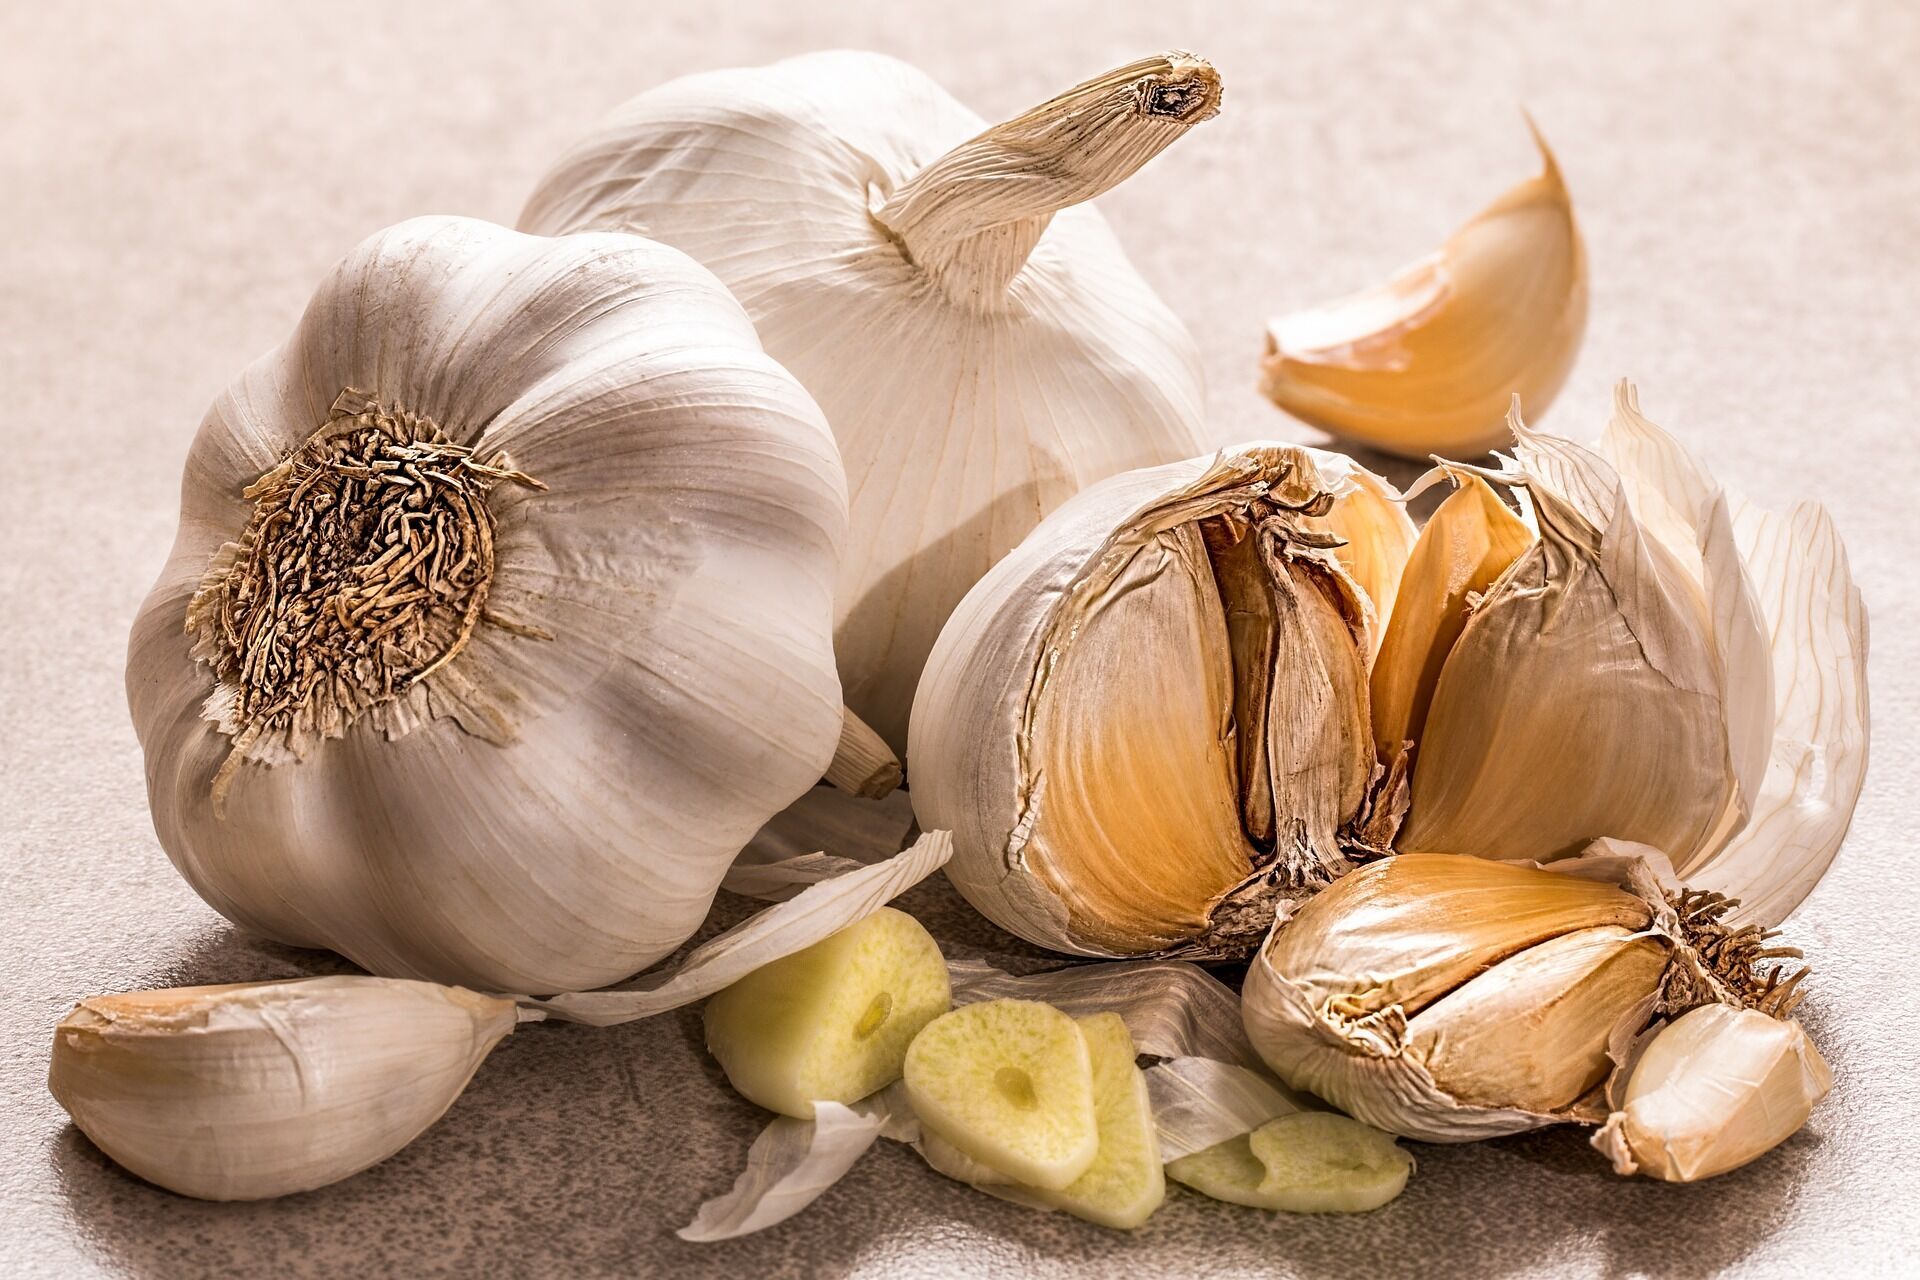 How to properly peel garlic